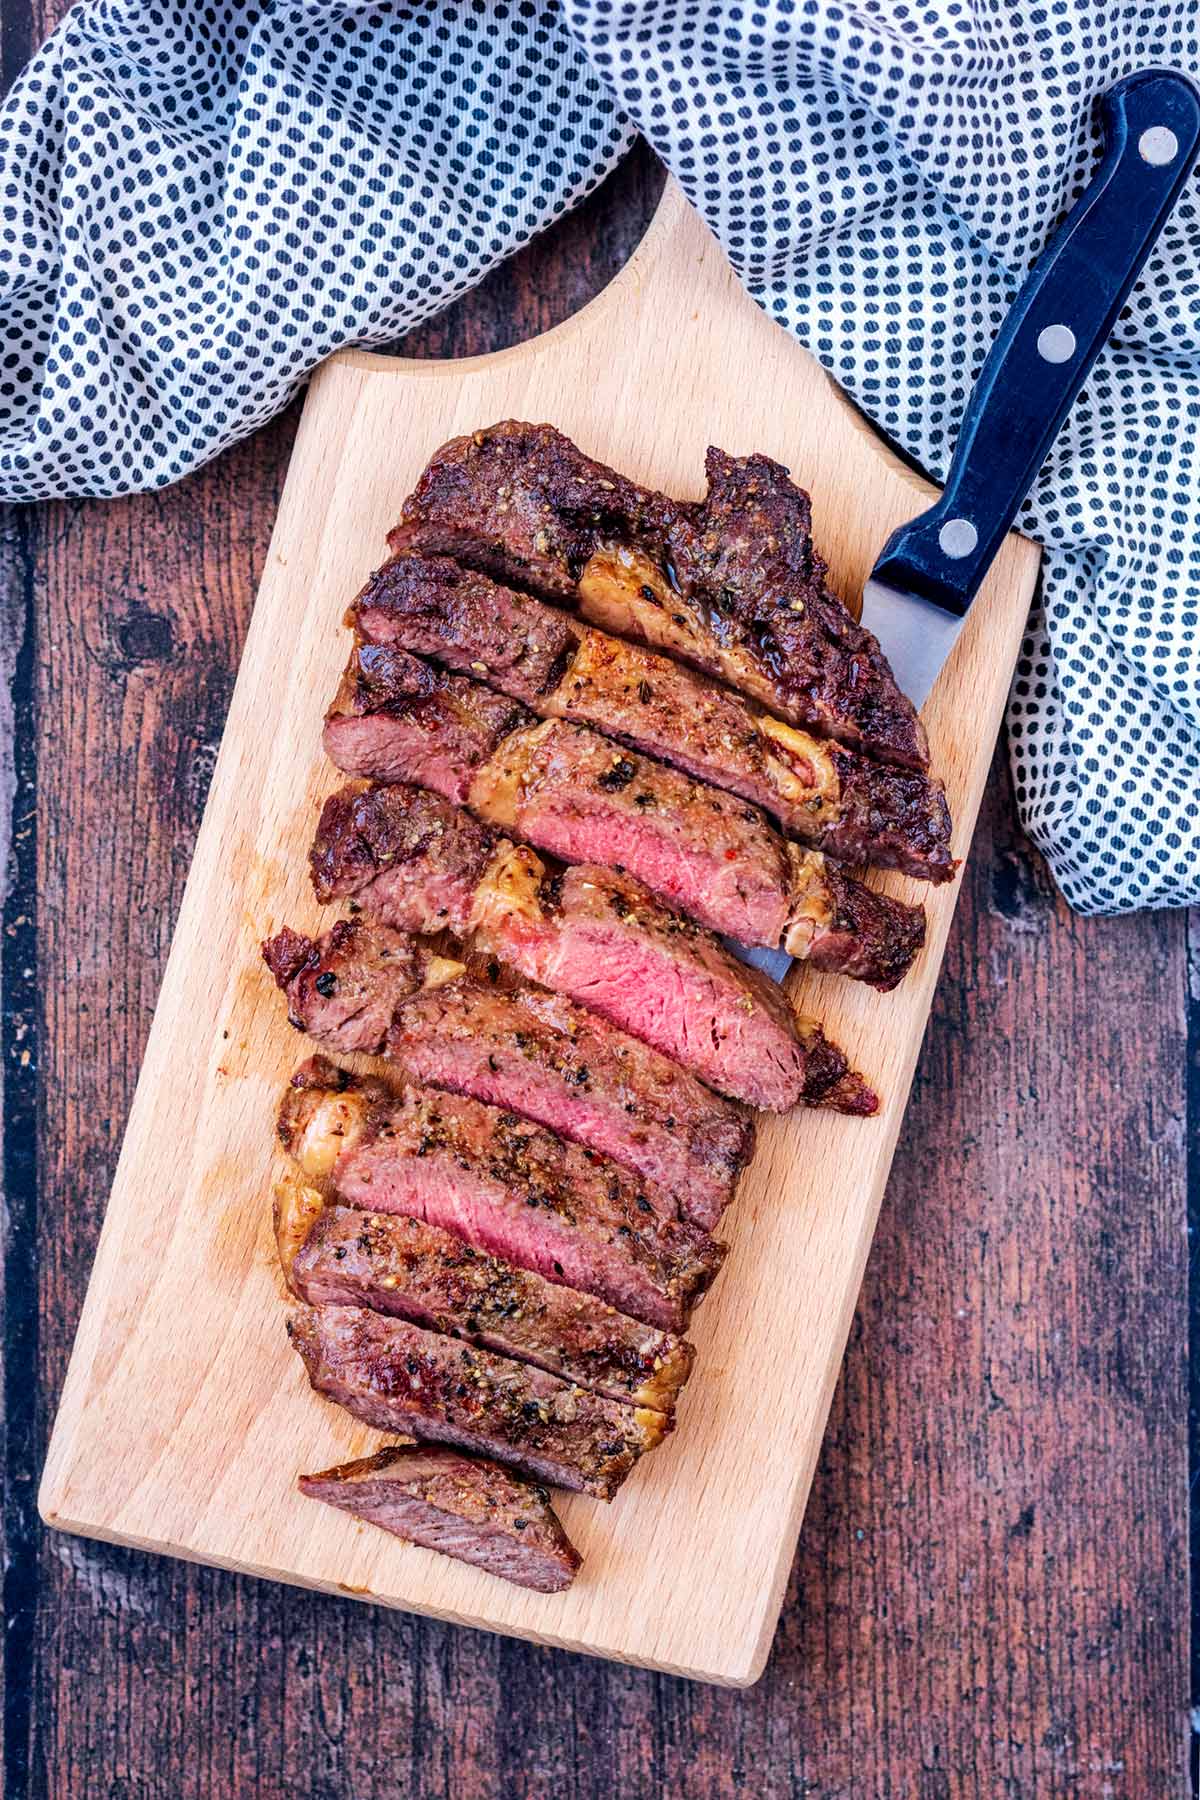 Strips of medium rare steak on a wooden serving board.